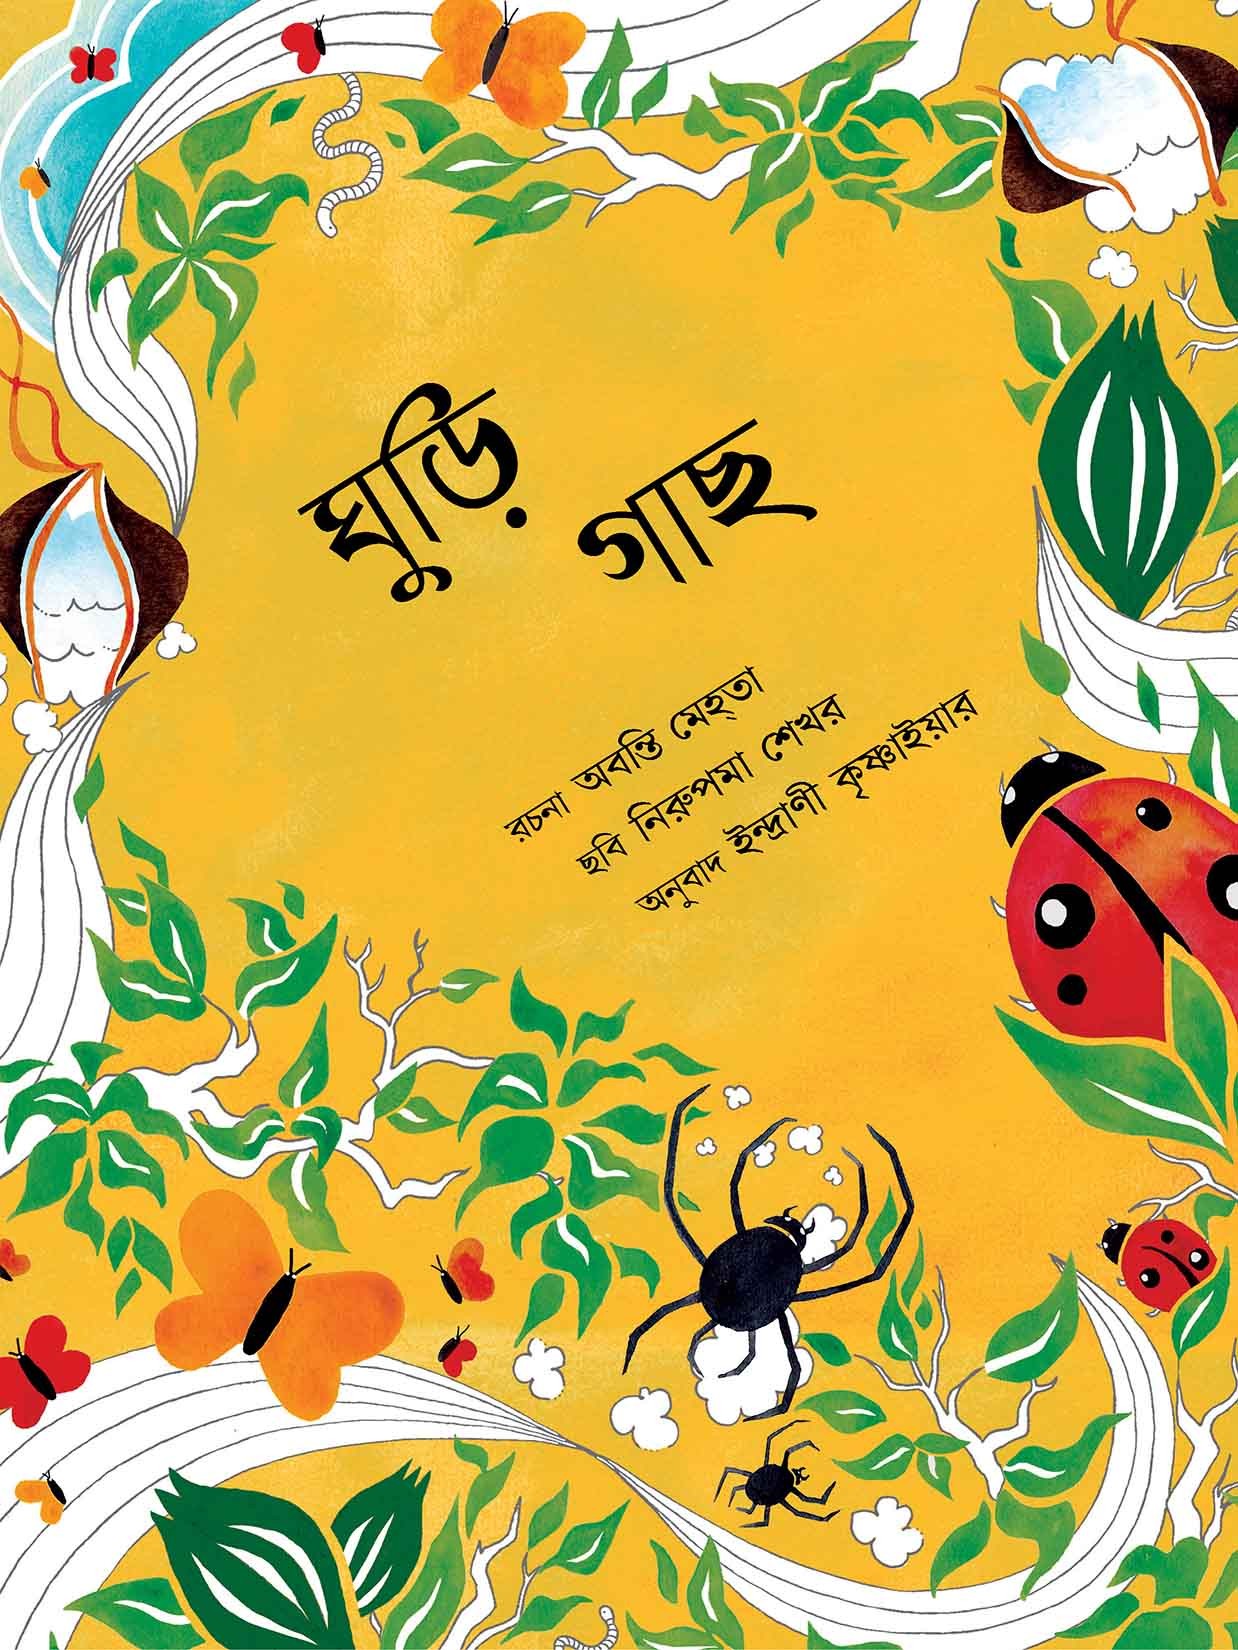 The Kite Tree/Ghudi Gaachh (Bengali)